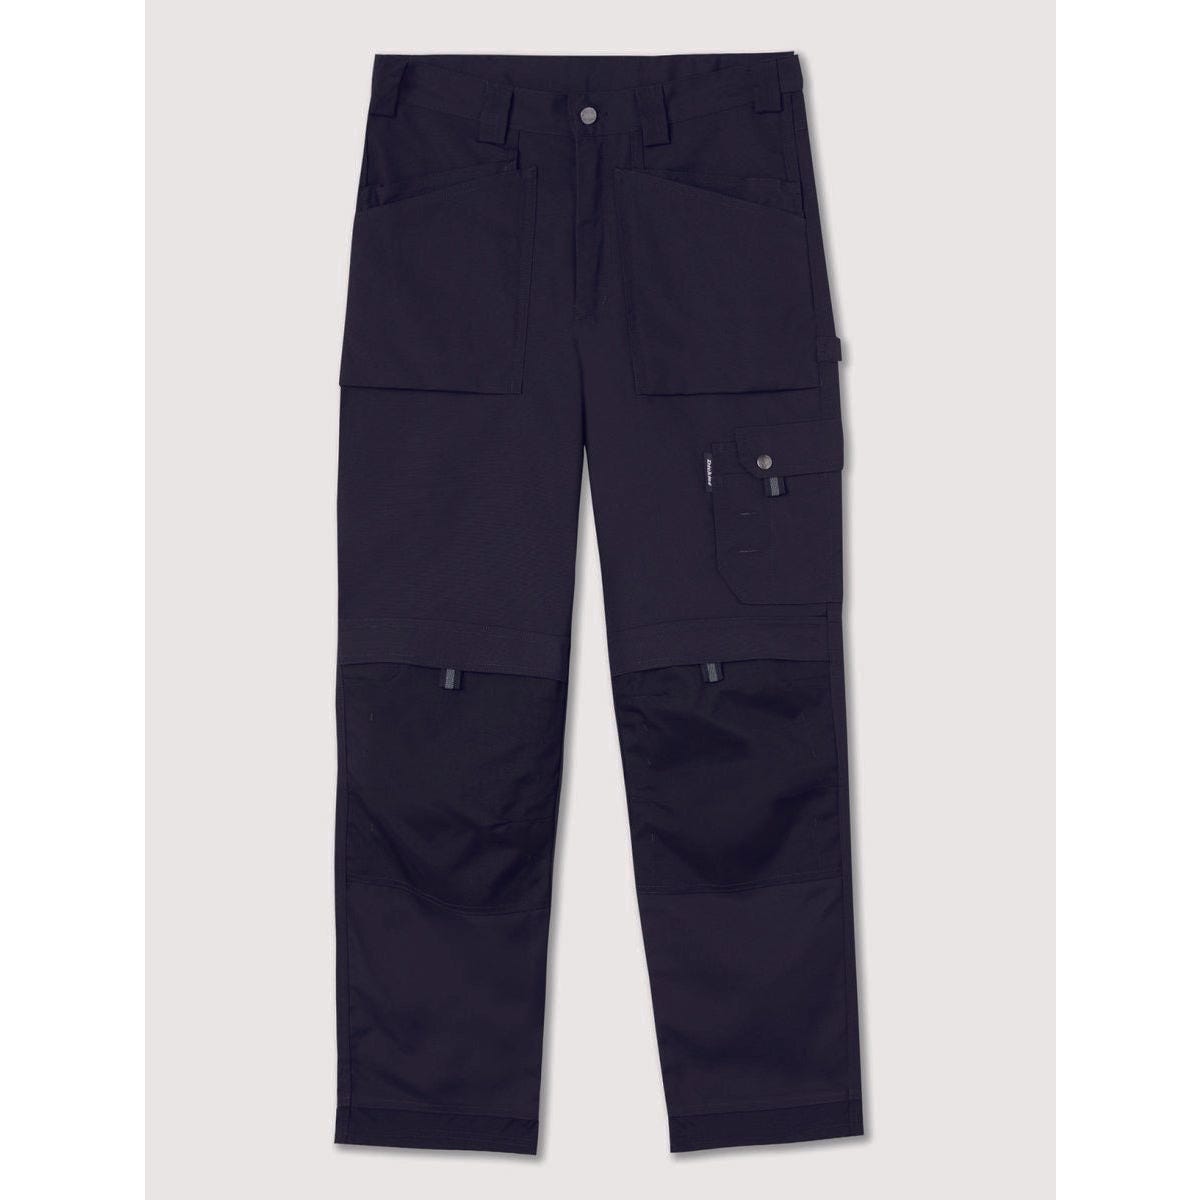 Pantalon Eisenhower multi-poches Noir - Dickies - Taille 48 6